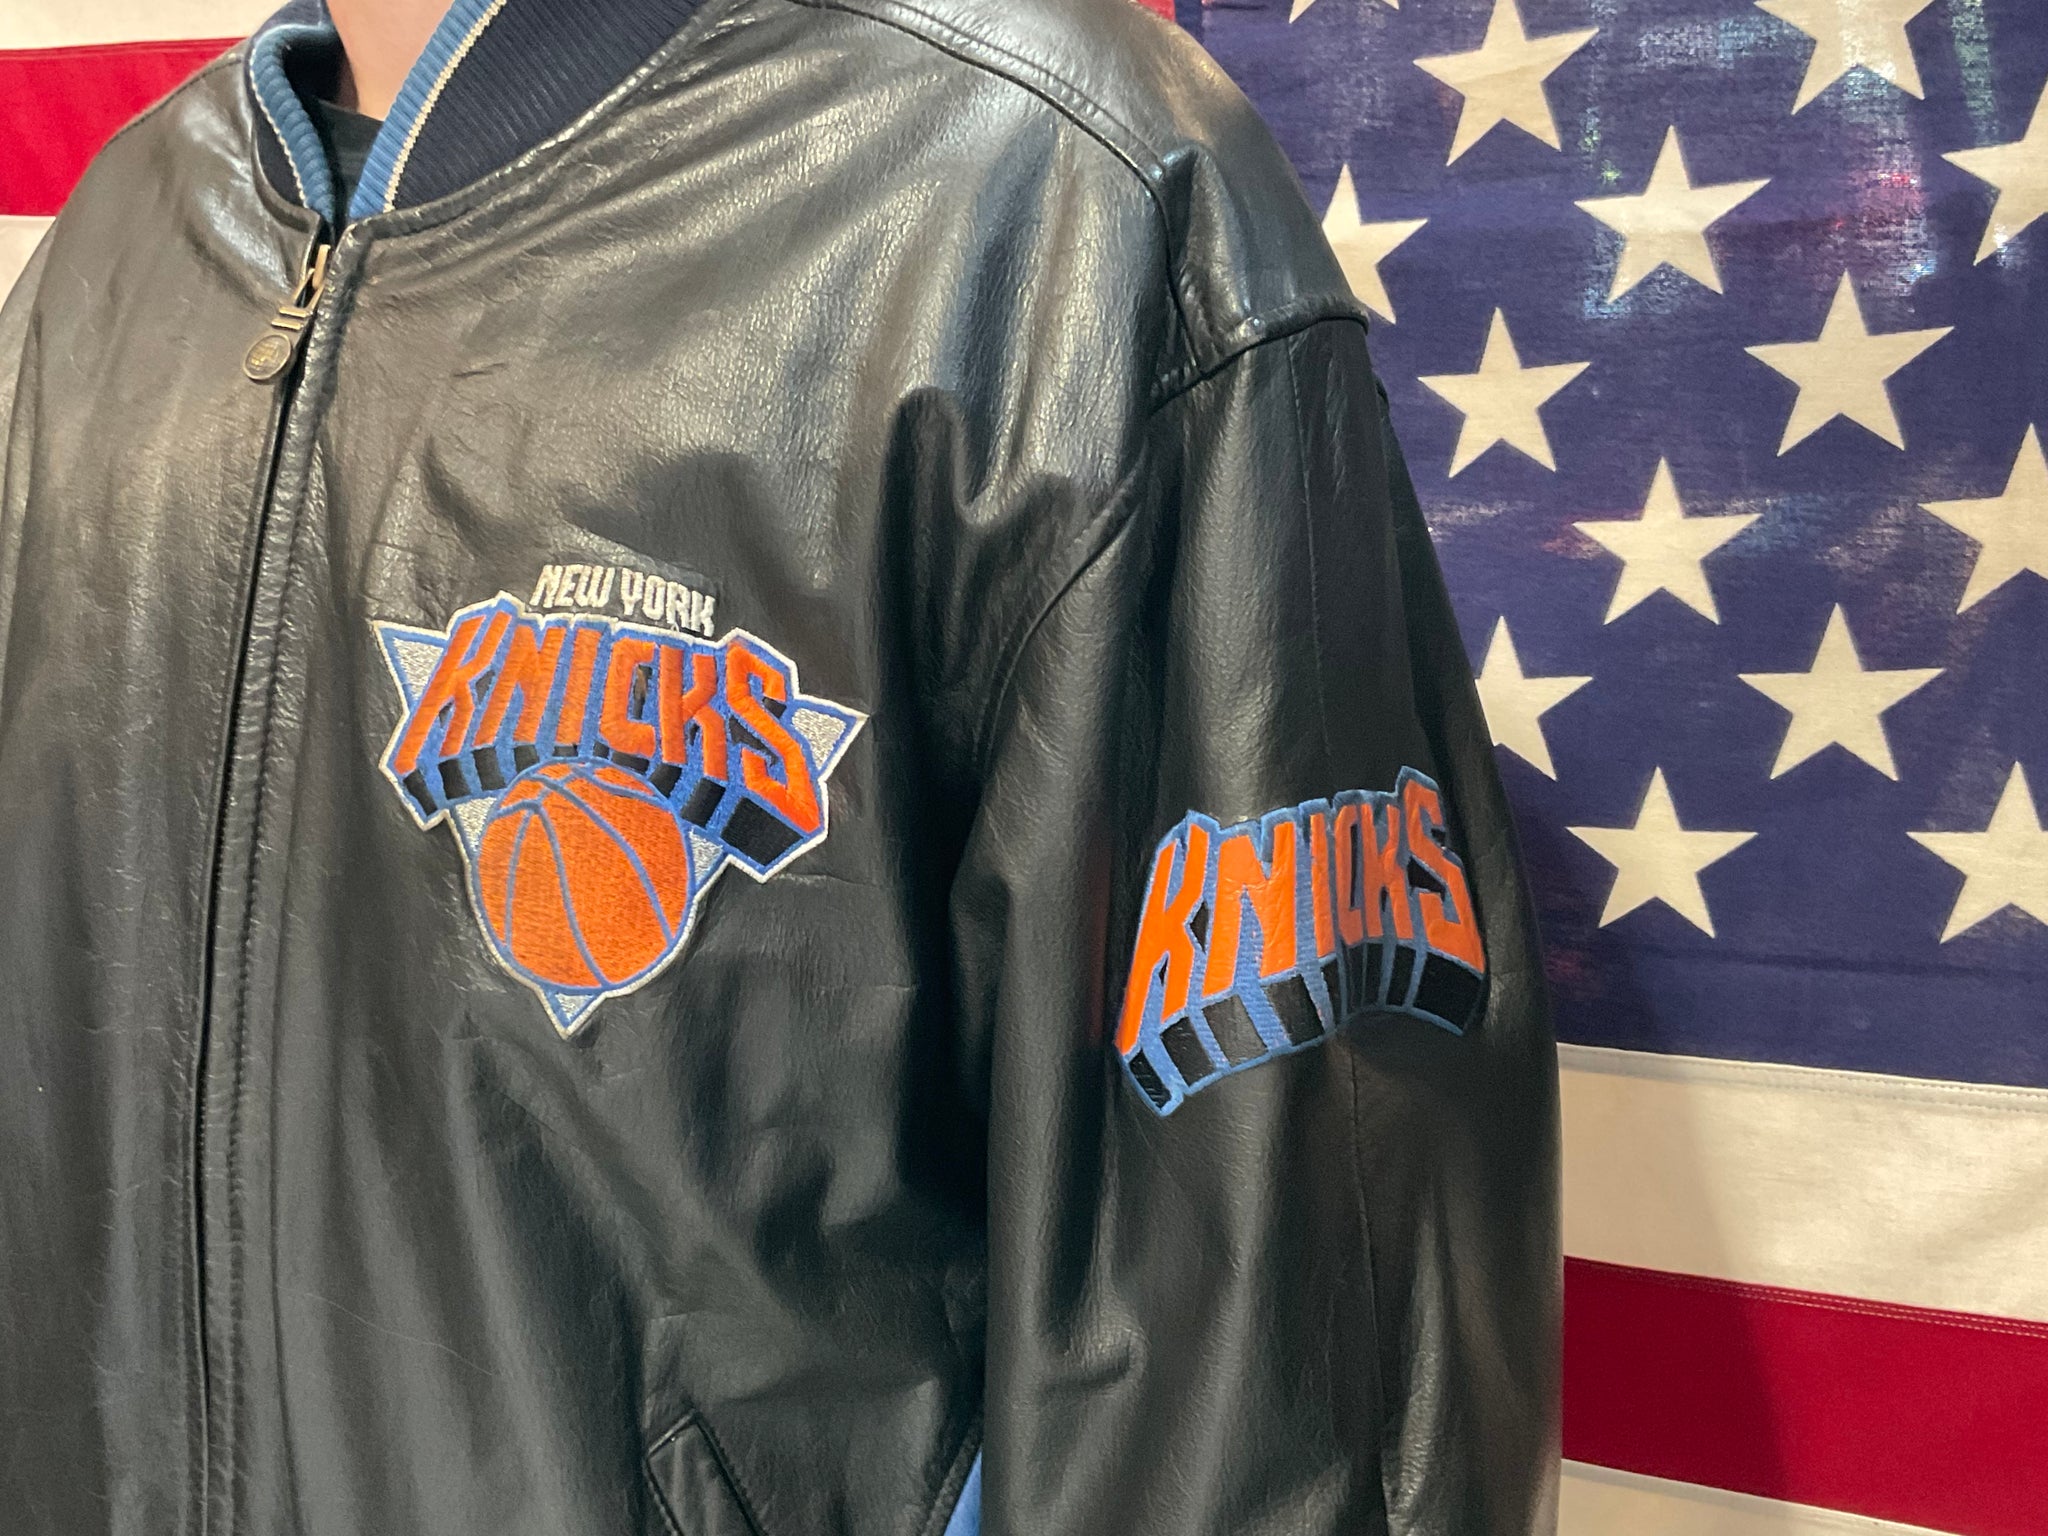 Vintage Starter Jacket New York Knicks 80's / 90's 